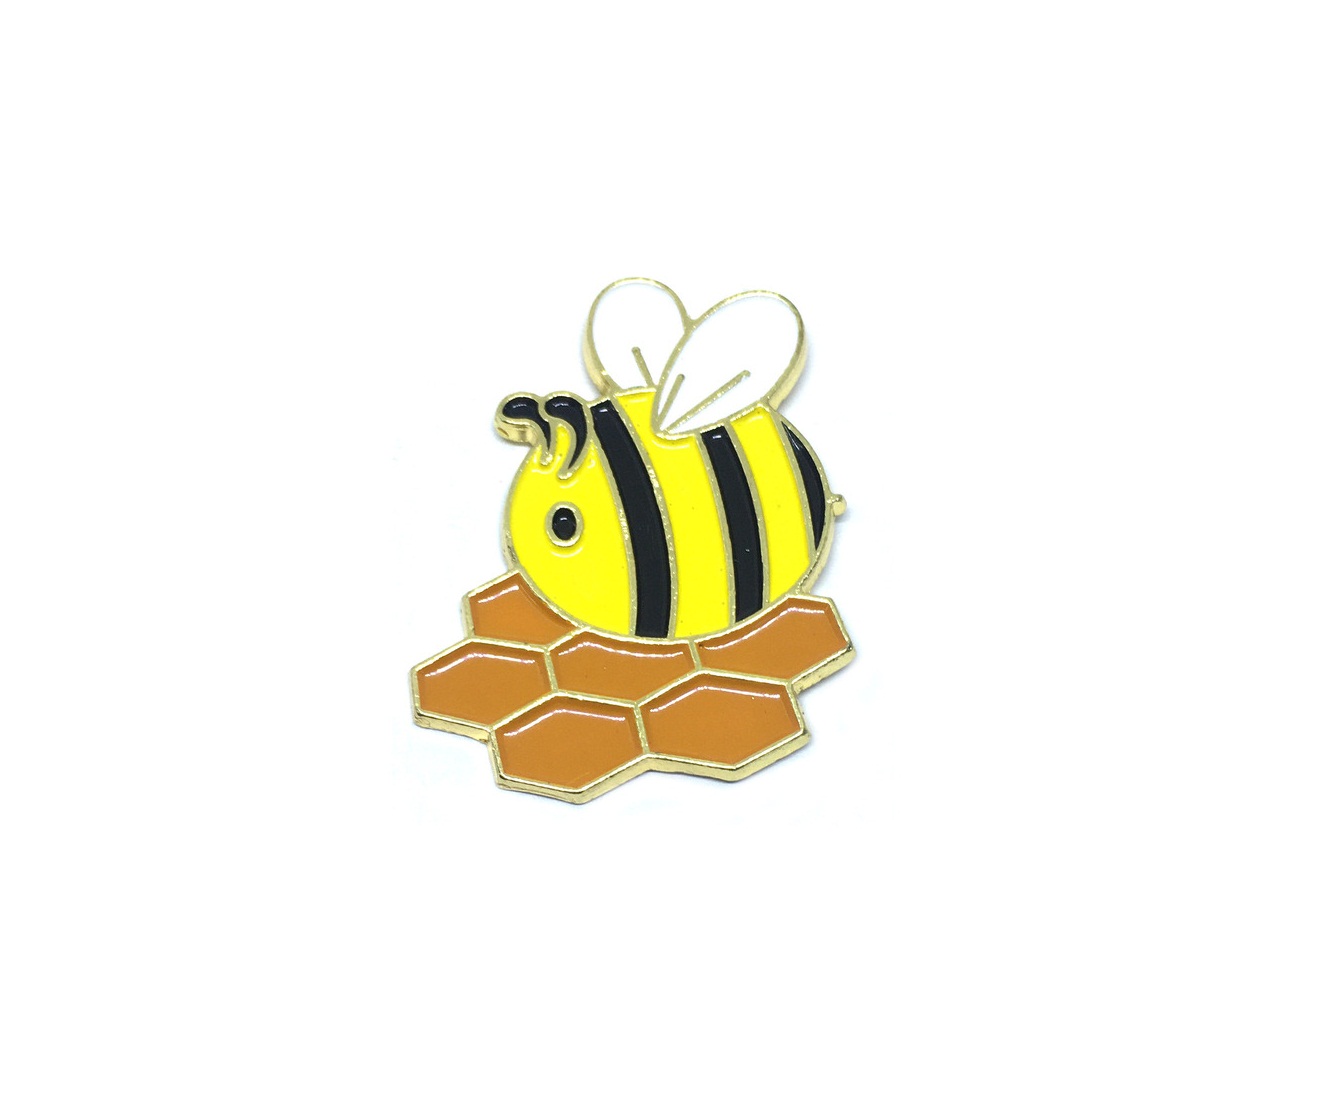 FHBEE-002 Honey Bee Brooch